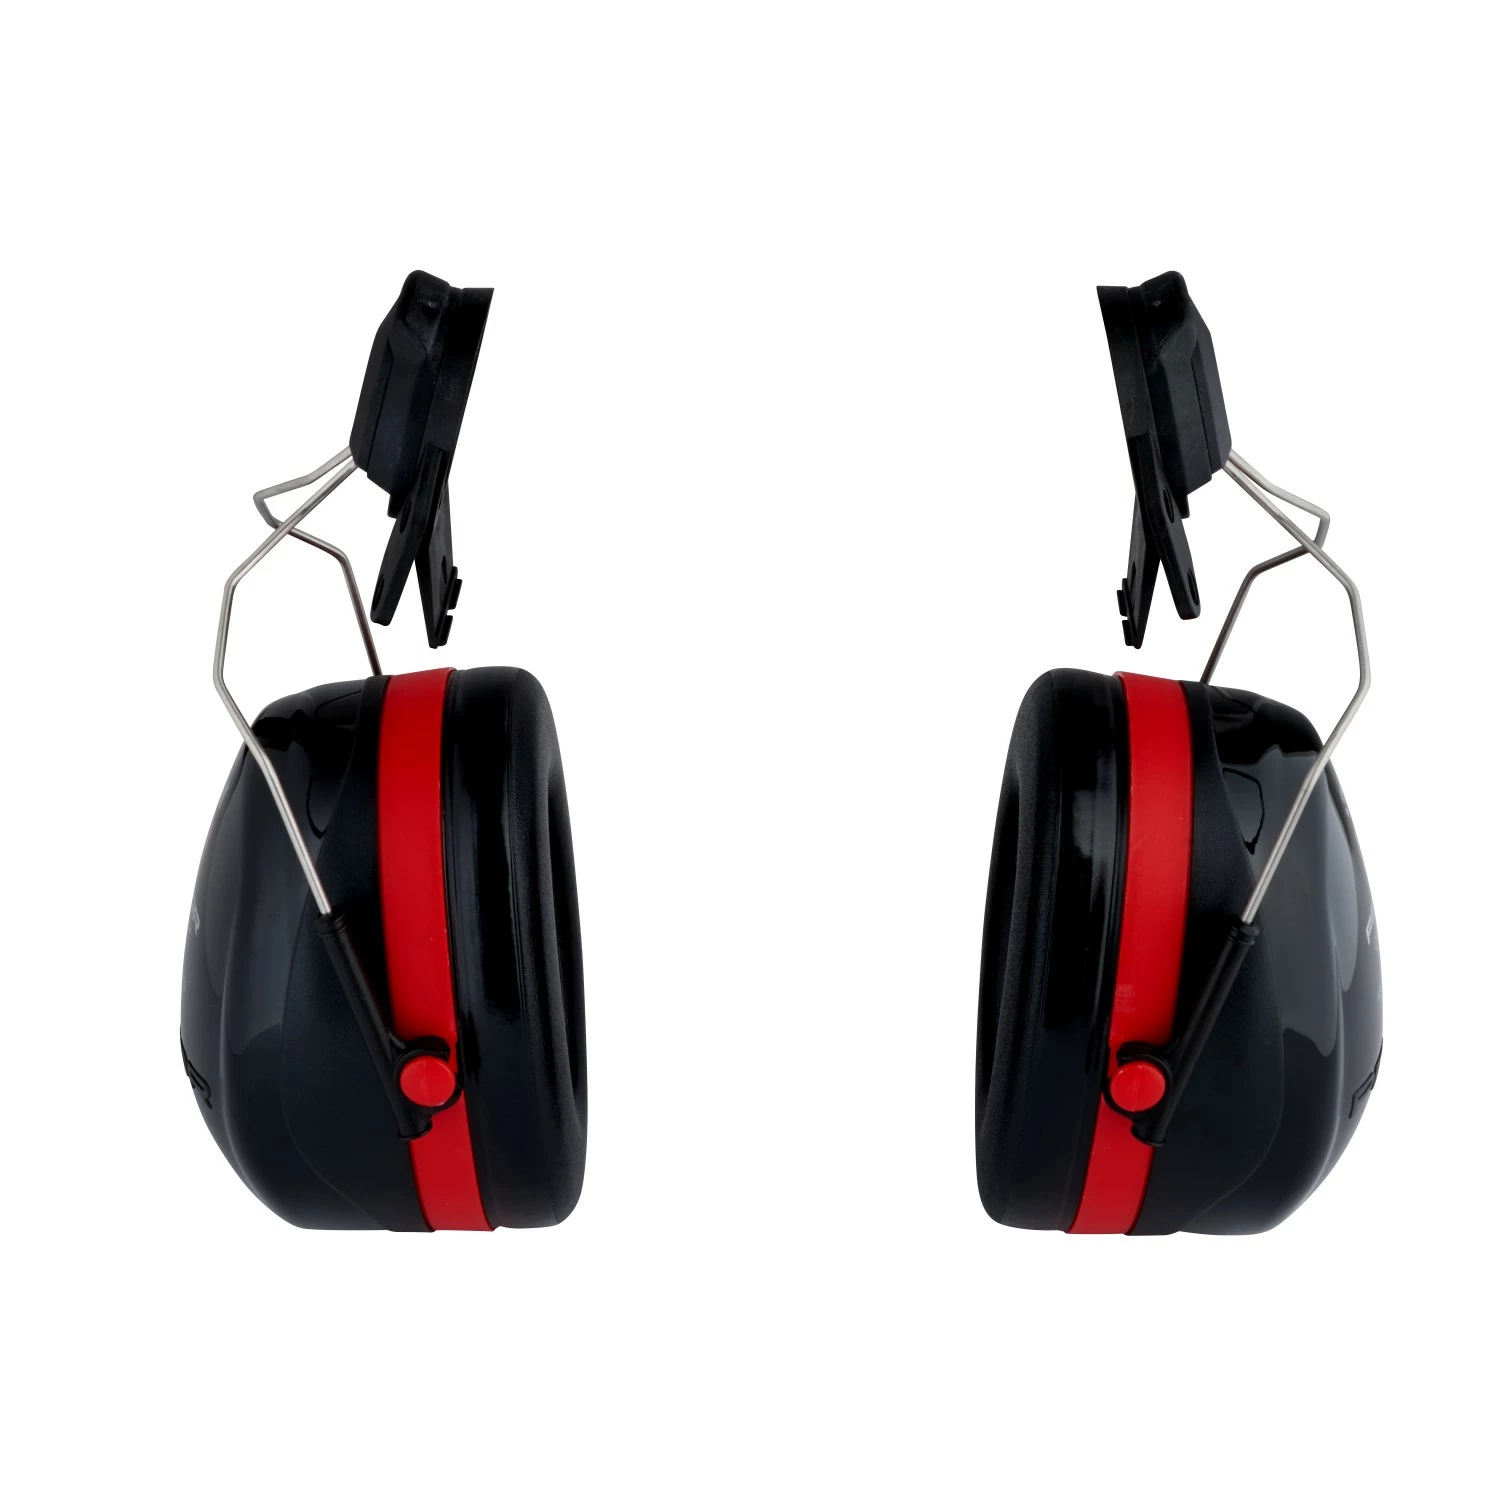 3M Casque antibruit PELTOR™ Optime™ III H540P3-413-SV avec attaches pour casque - Noir/Rouge -